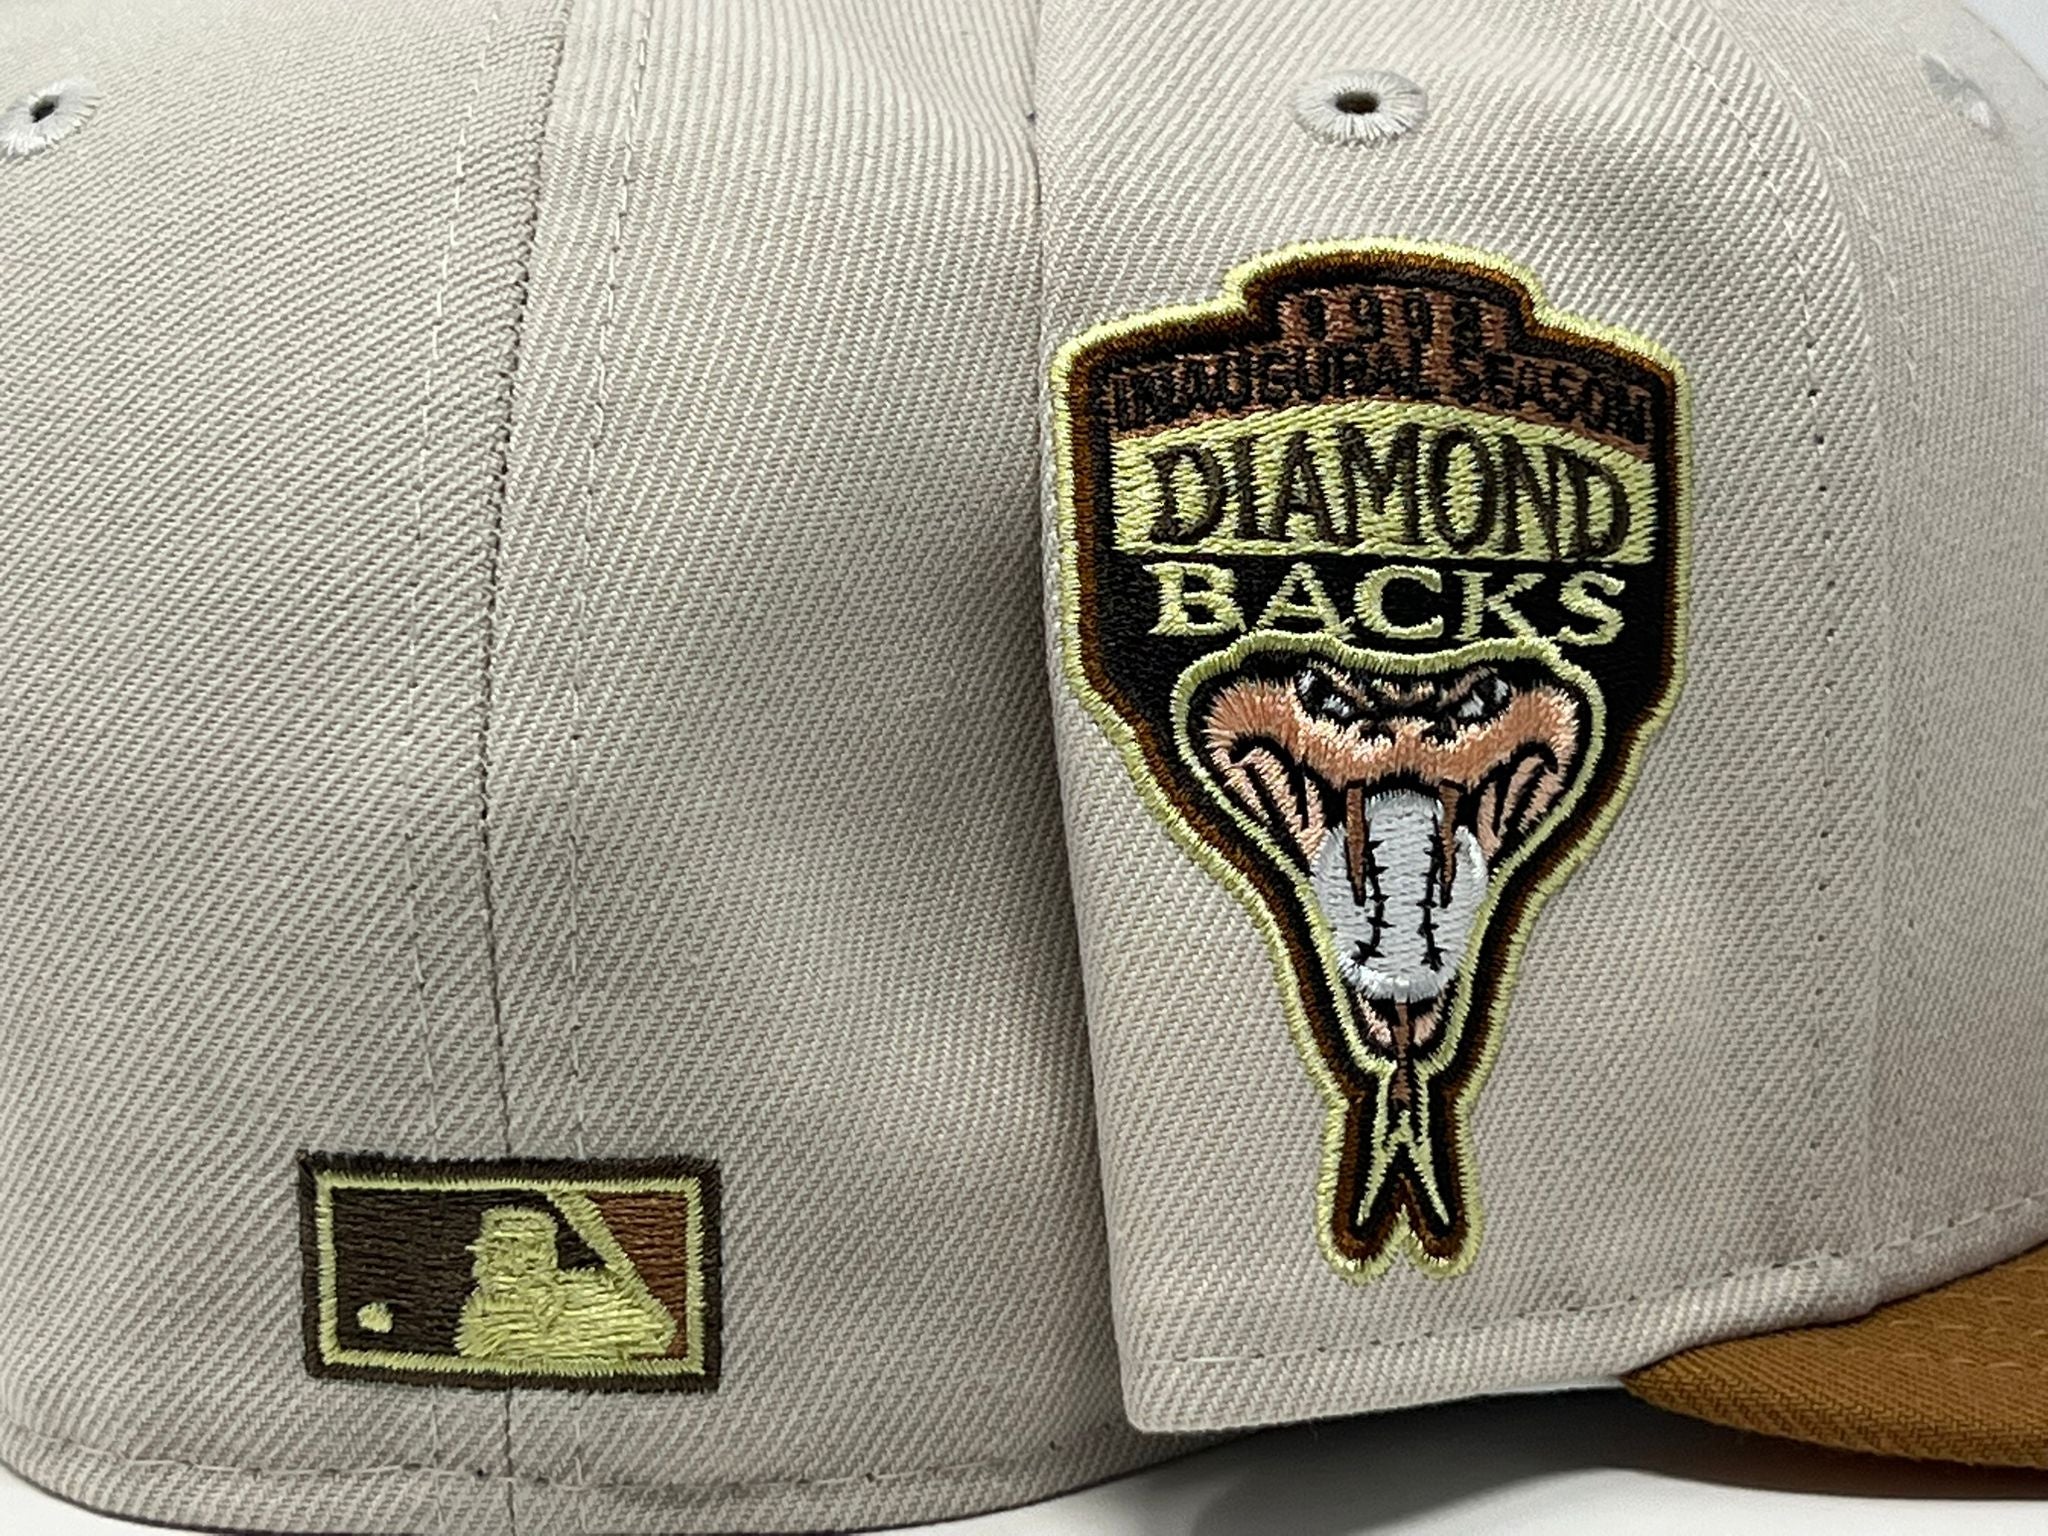  1998 Topps Baseball Factory Sealed Set Arizona Diamondbacks  Edtion : Collectibles & Fine Art